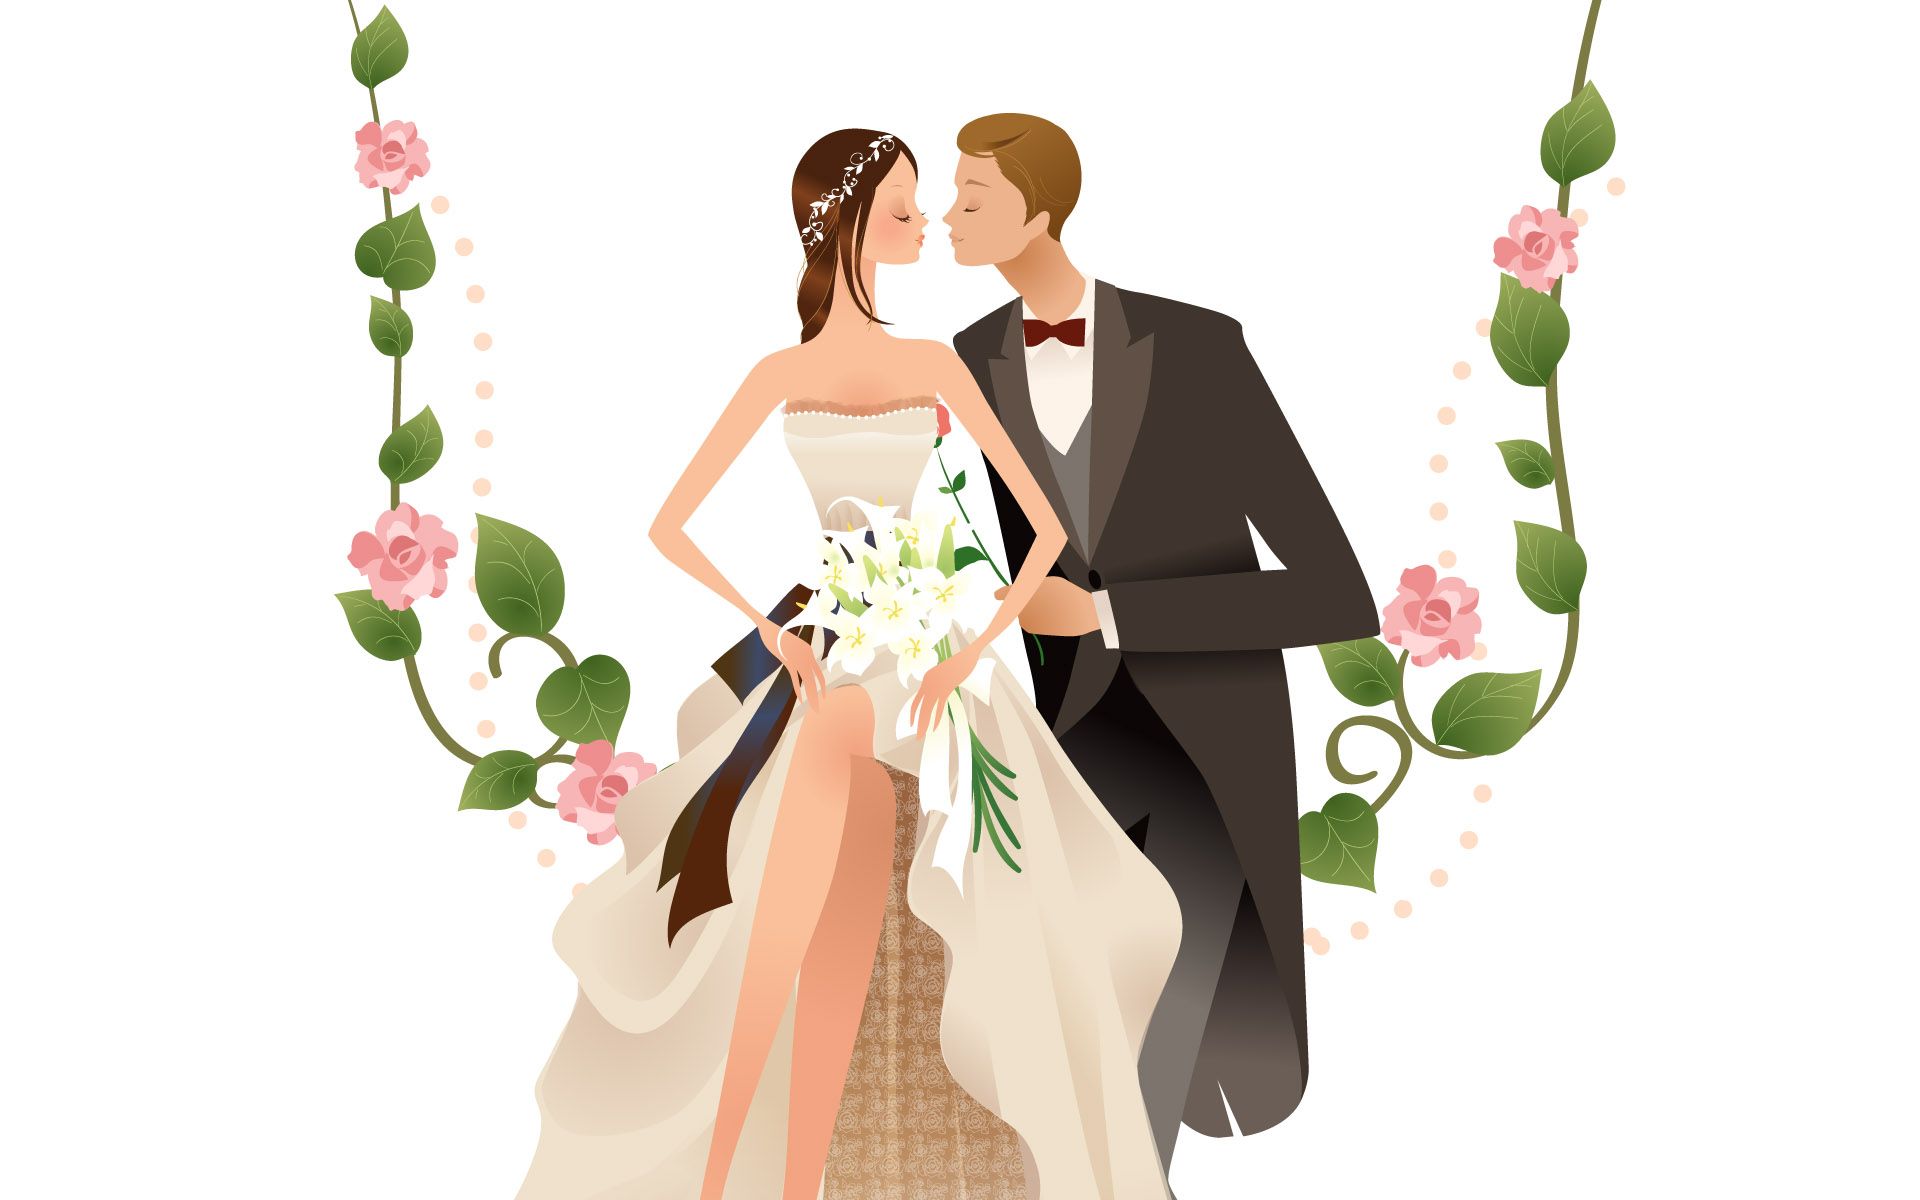 Free Wedding Couple Cartoon Image, Download Free Wedding Couple Cartoon Ima...